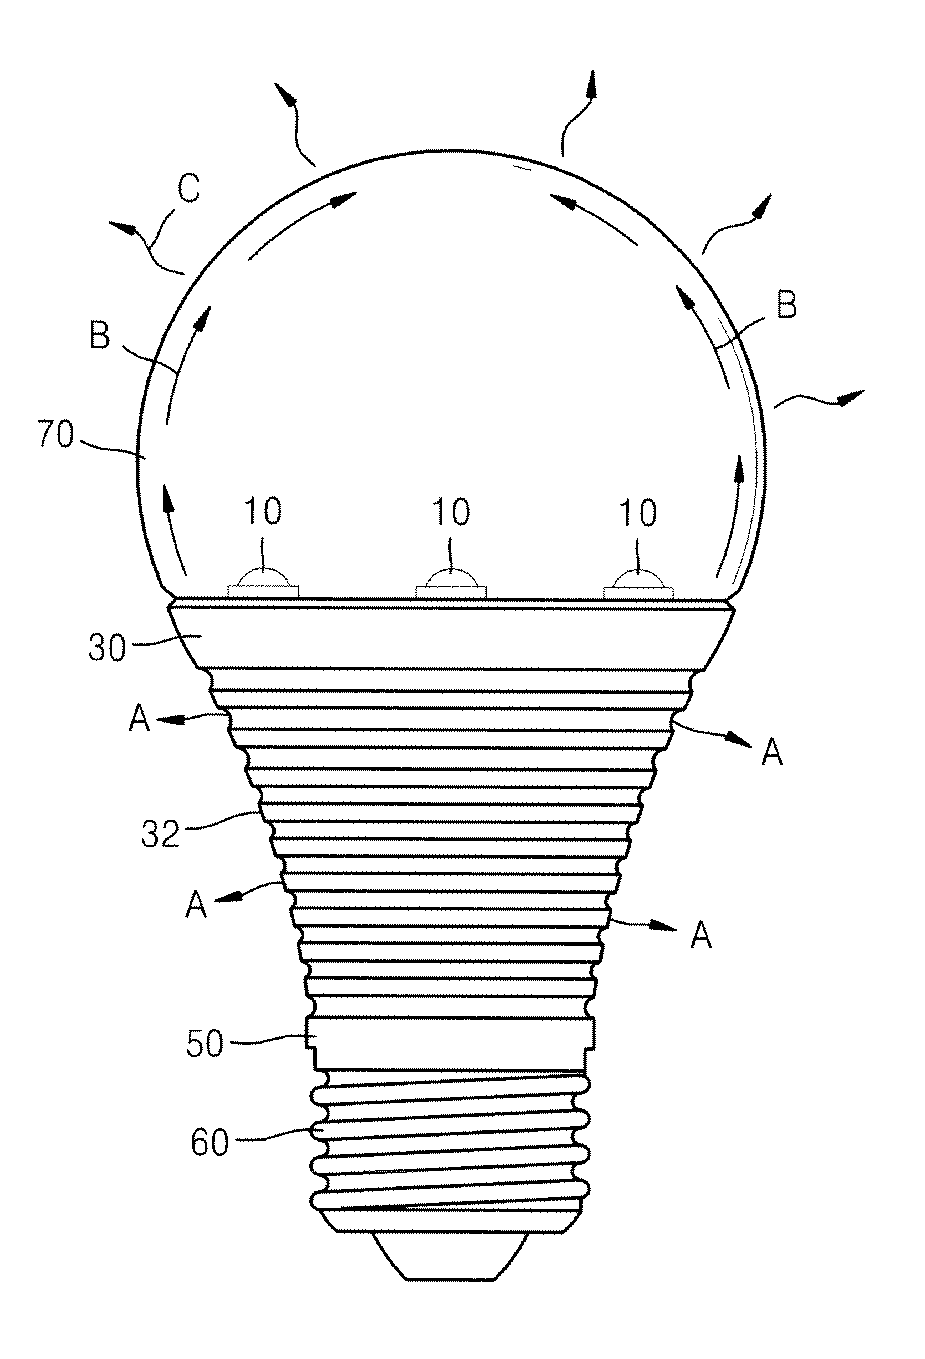 Light emitting diode (LED) lamp